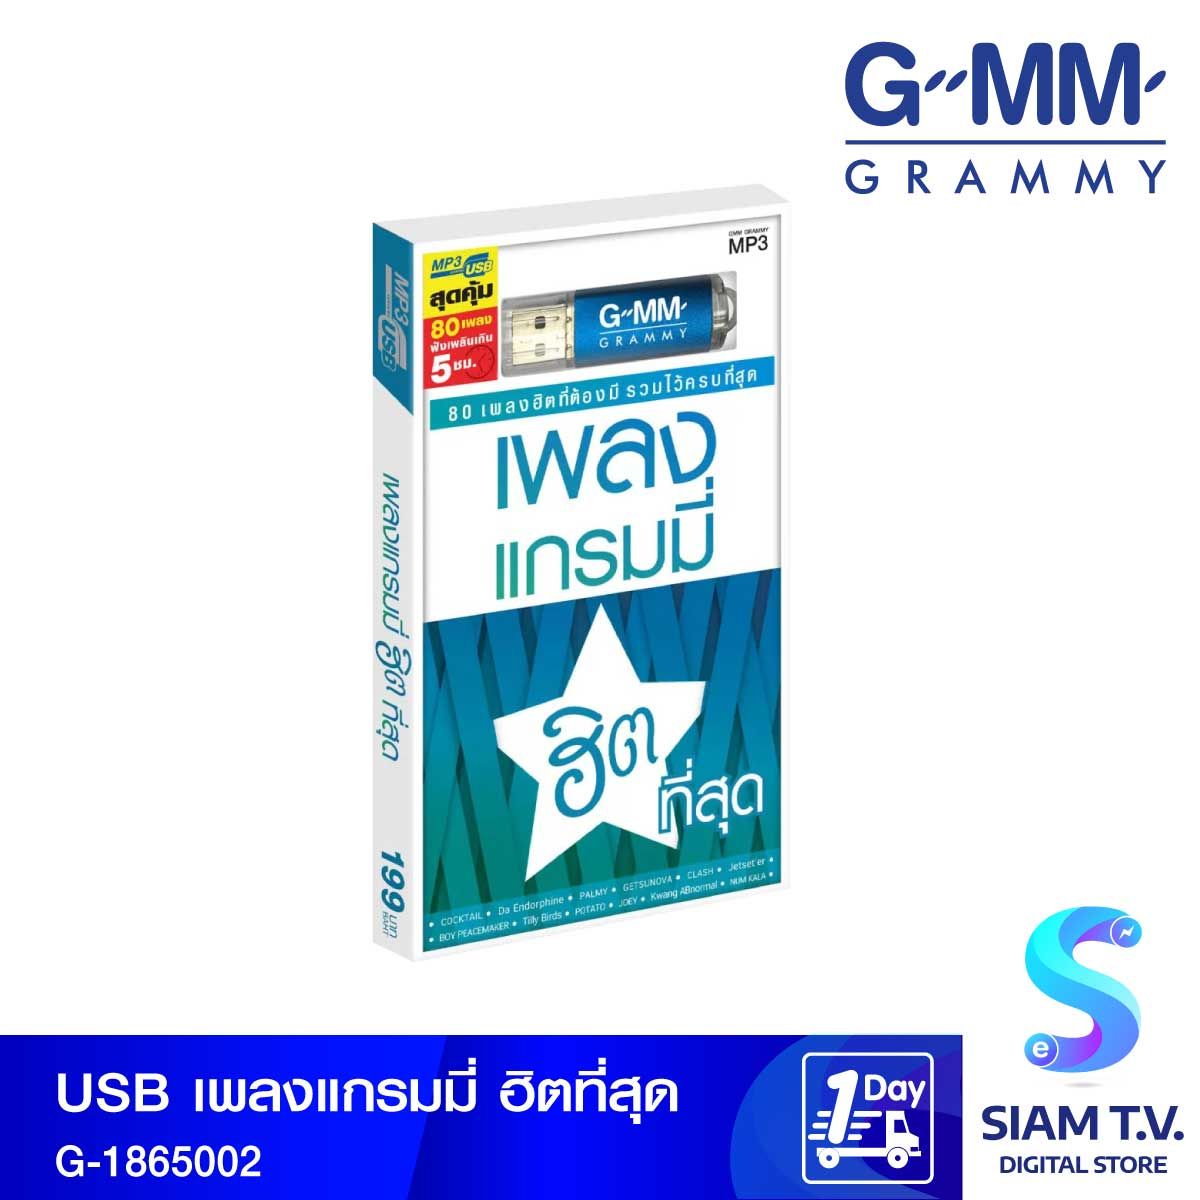 GMM GRAMMY USB เพลงแกรมมี่ฮิตที่สุด G-1865002